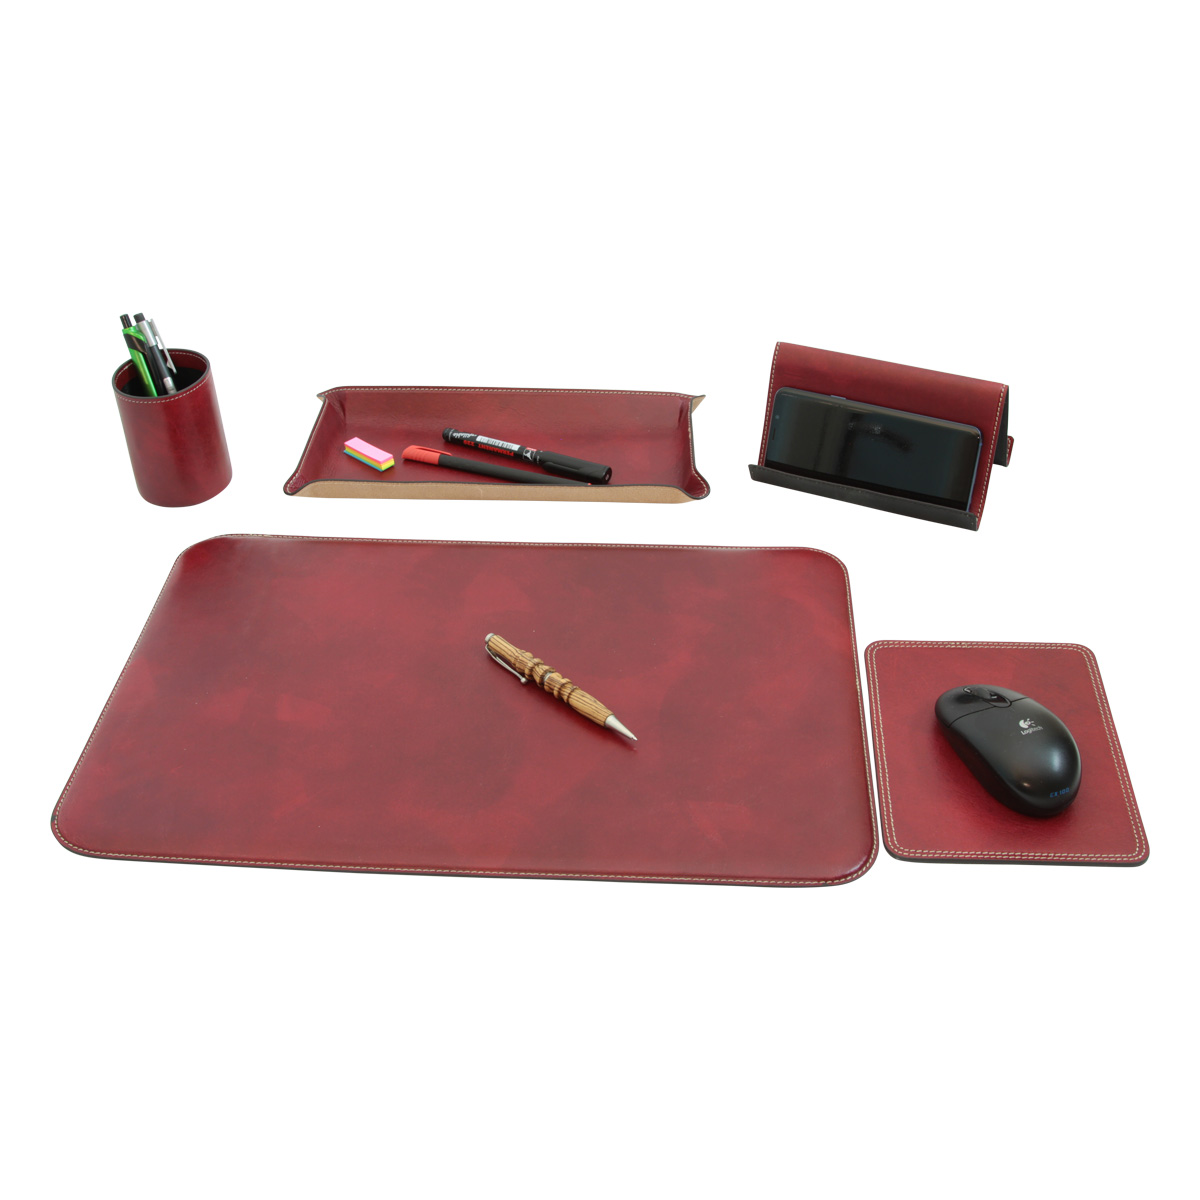 Leather desk kit - 5 pcs  red|769089RO|Old Angler Firenze